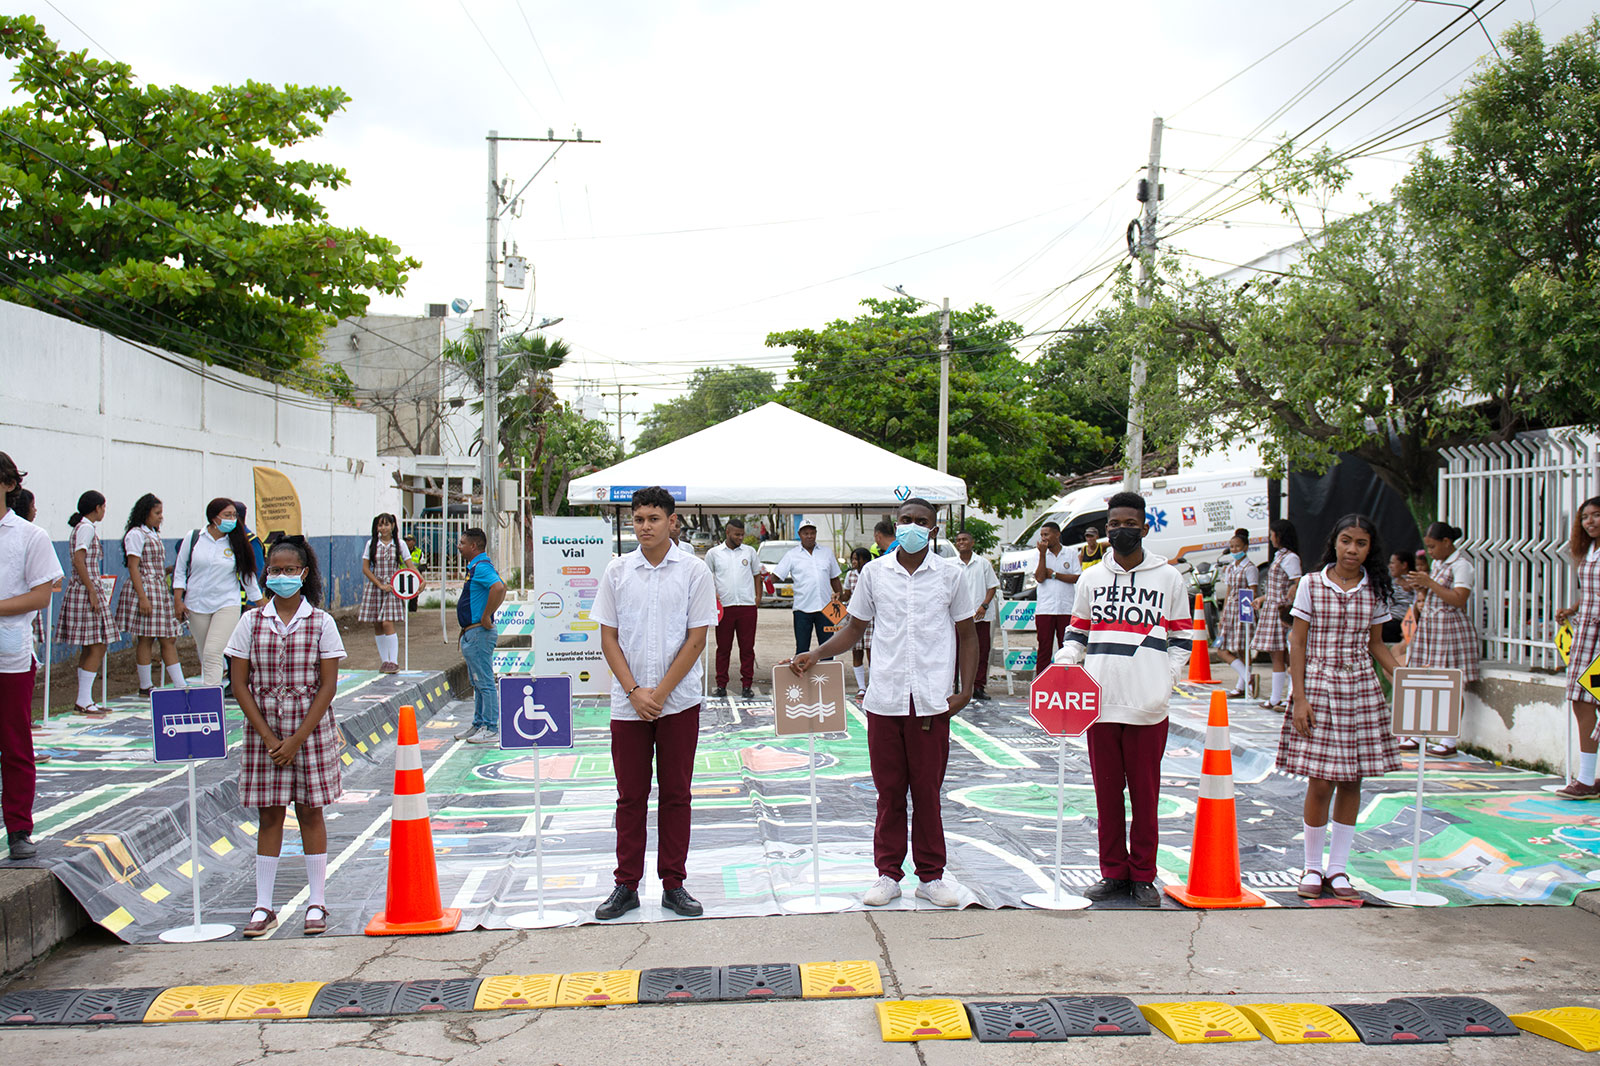 The road safety event at the Colegio Pedro Romero School.